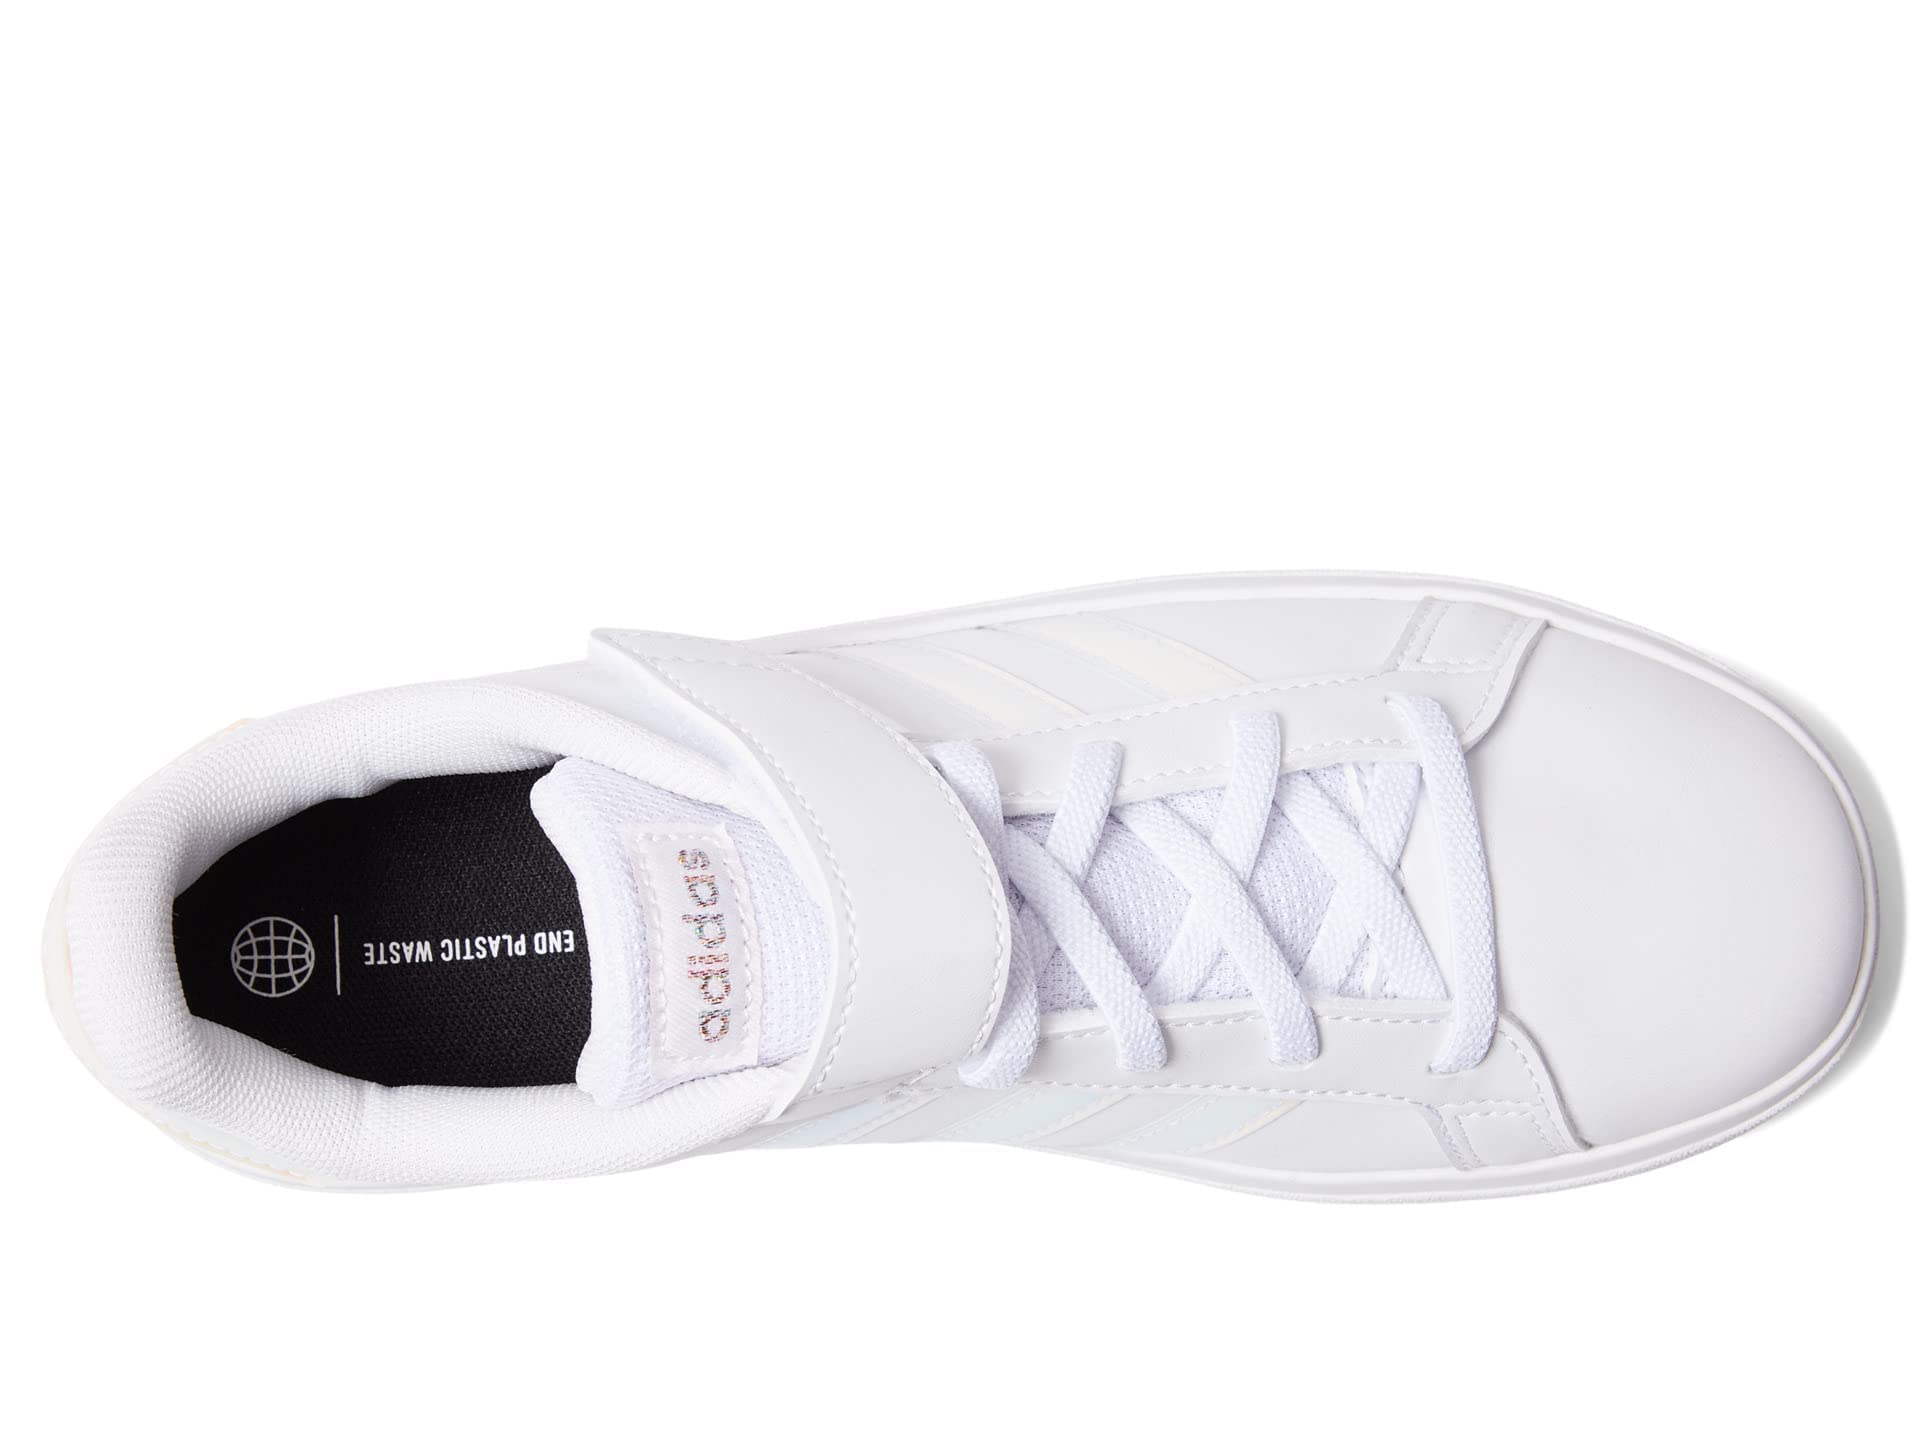 adidas Unisex-Child Grand Court Mini Me Cf (Toddler) Tennis Shoe